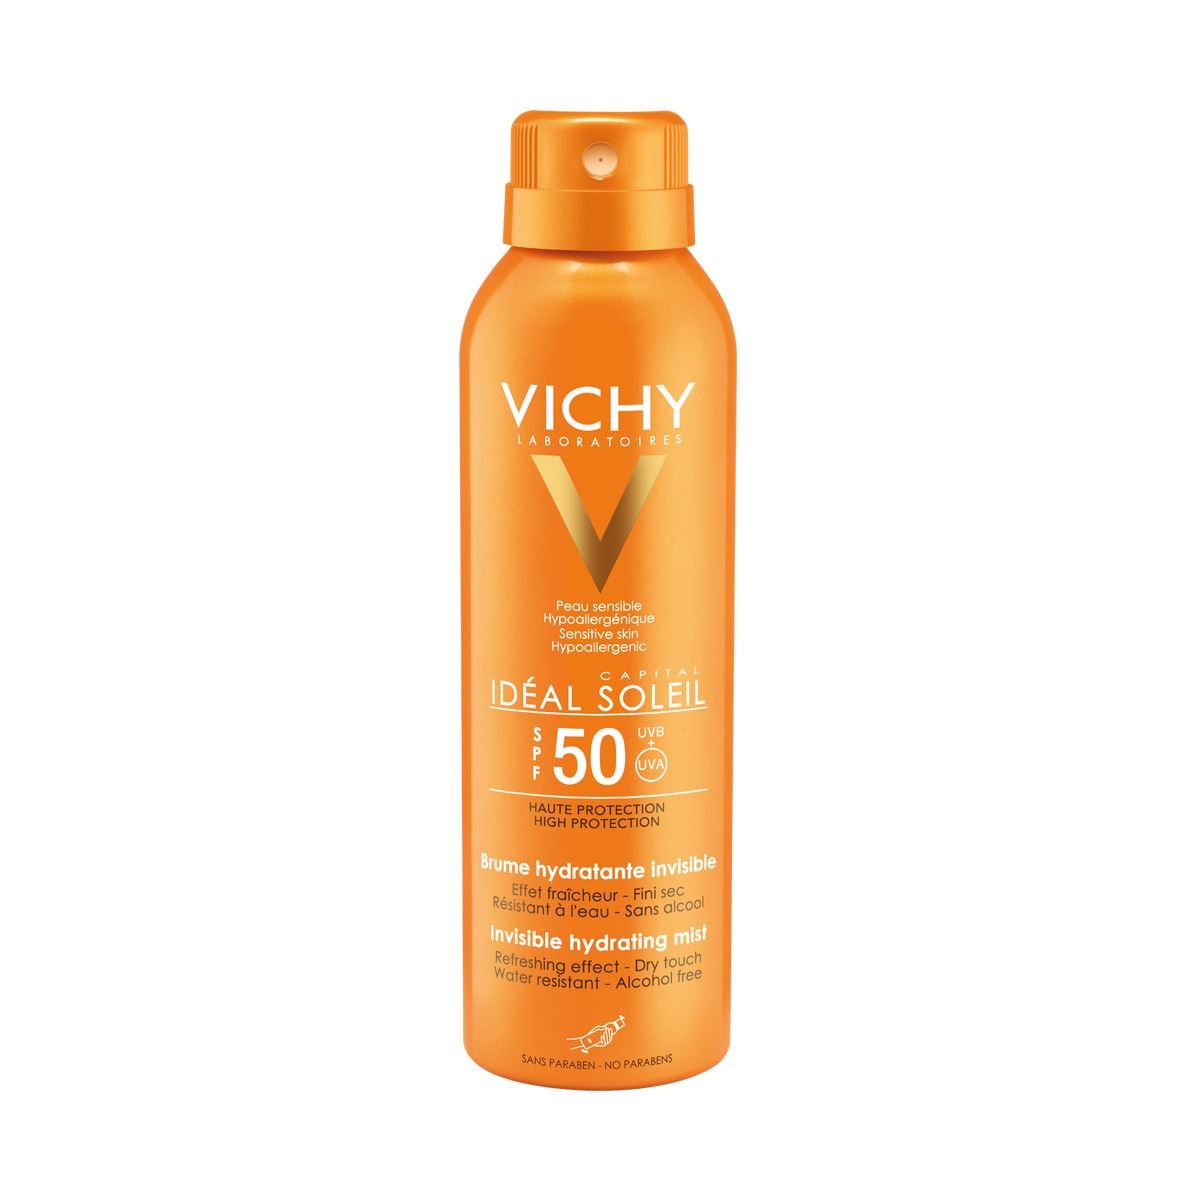 Vichy Prot Solar Ideal Soleil Hydramist Fps 50+